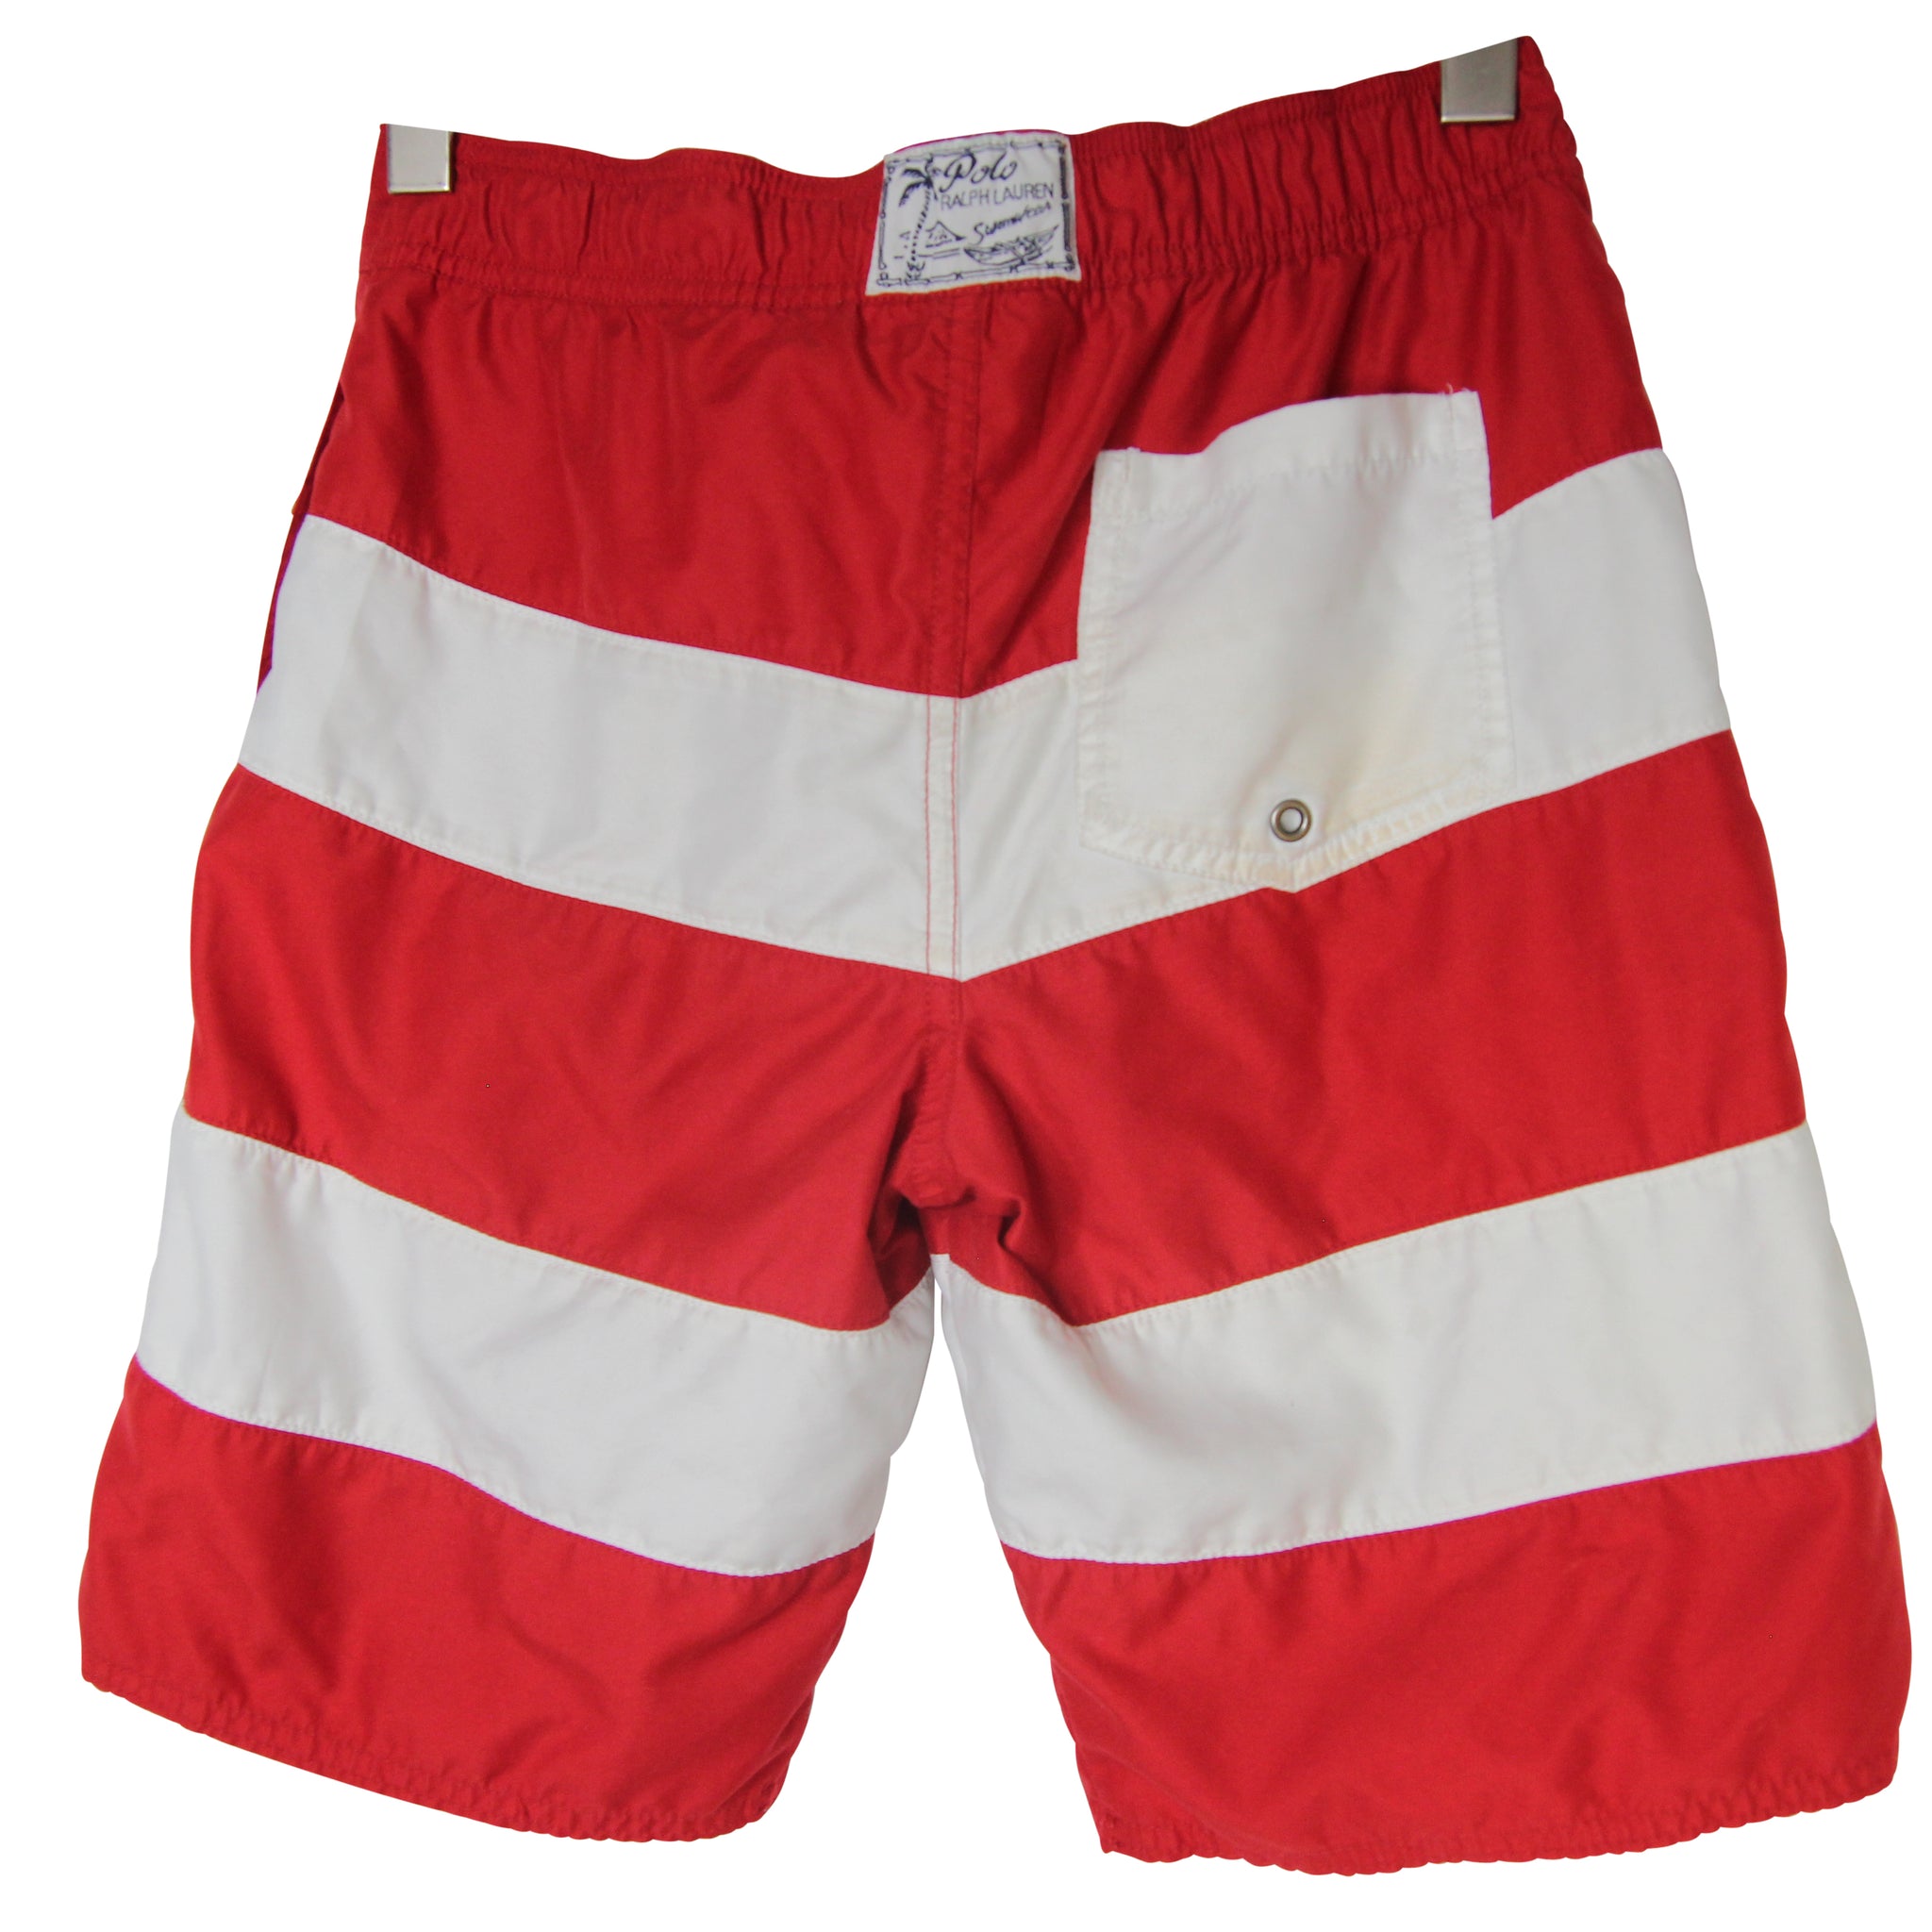 Polo Ralph Lauren Striped Swim Shorts